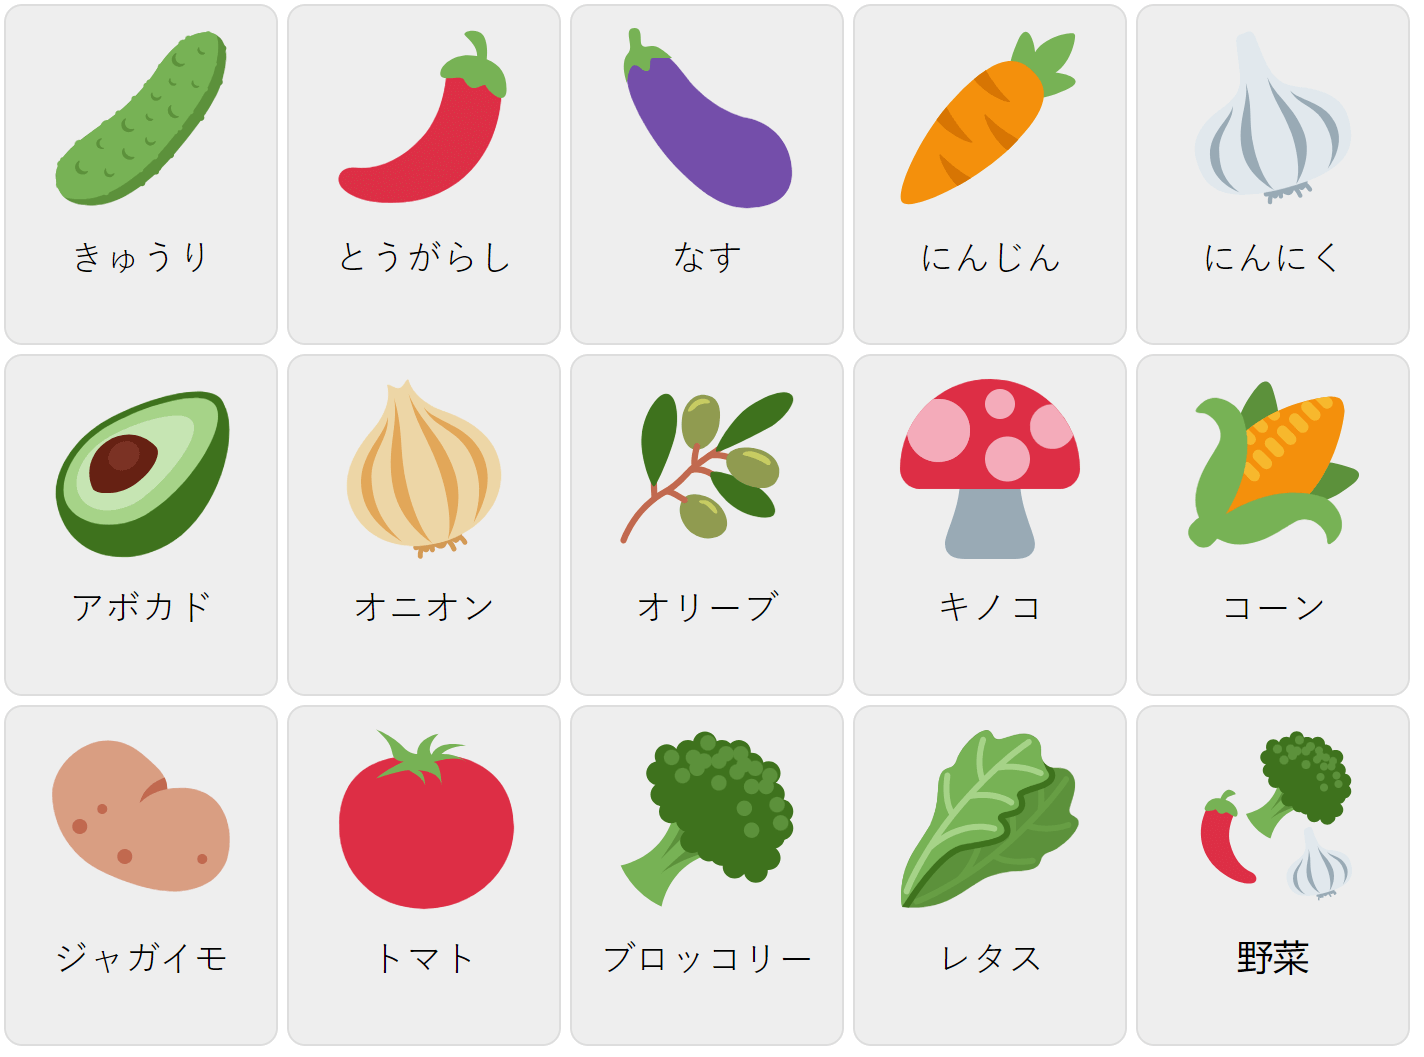 Vegetables in Japanese